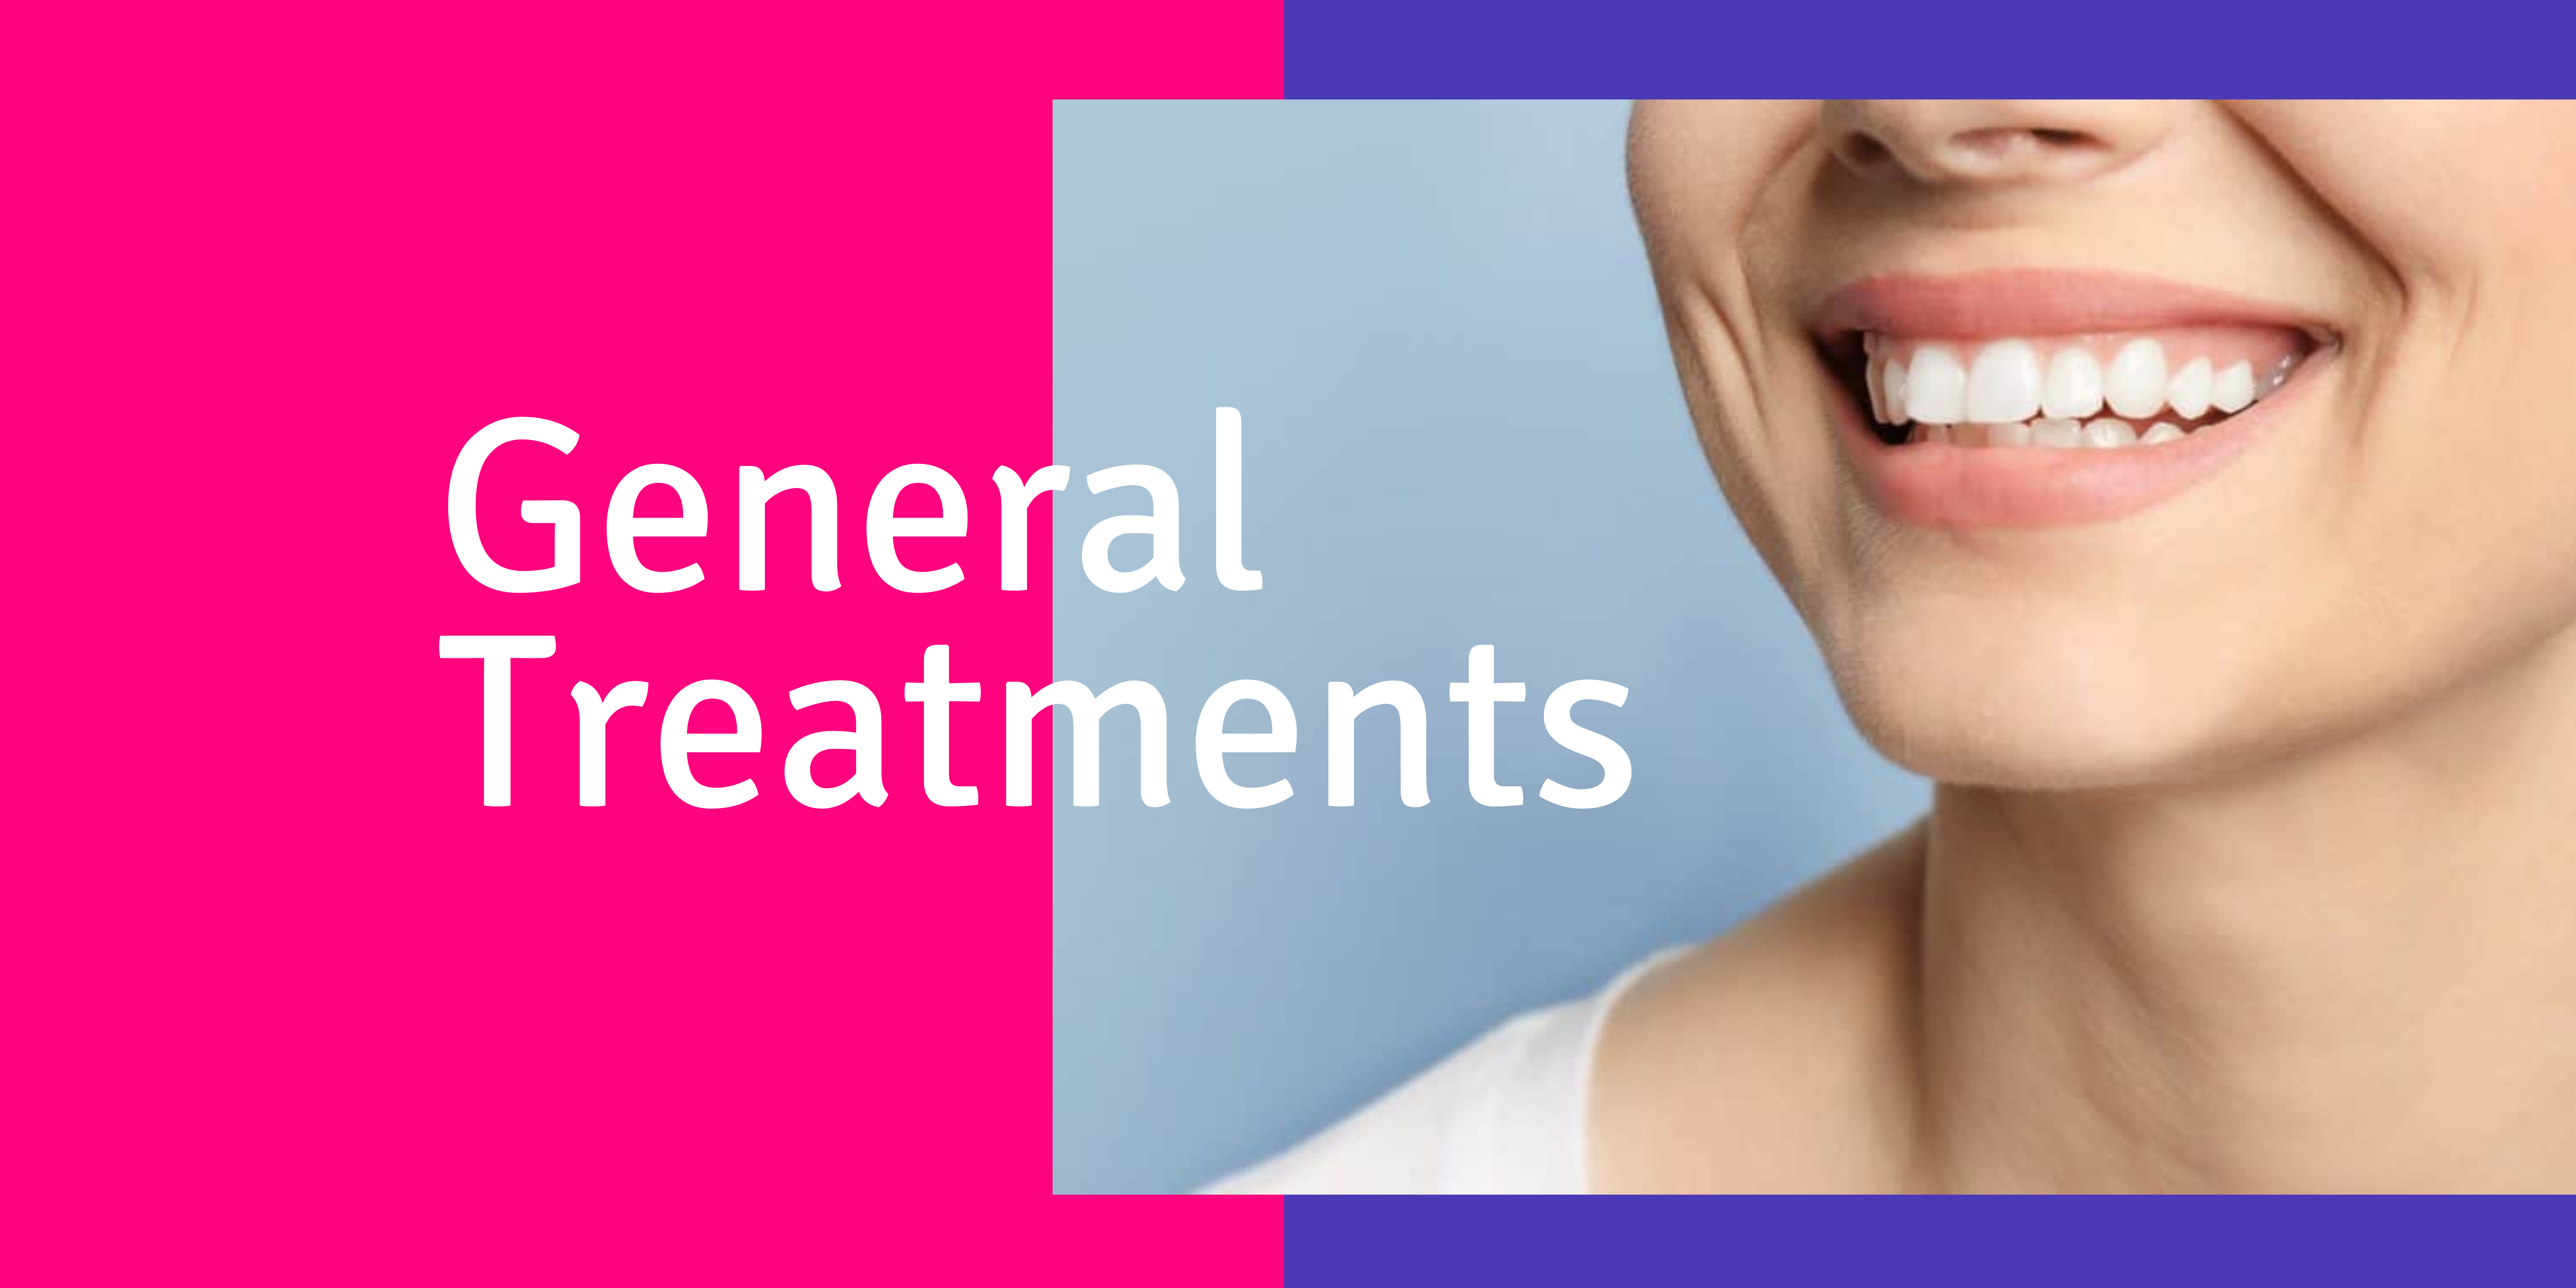 General Treatments